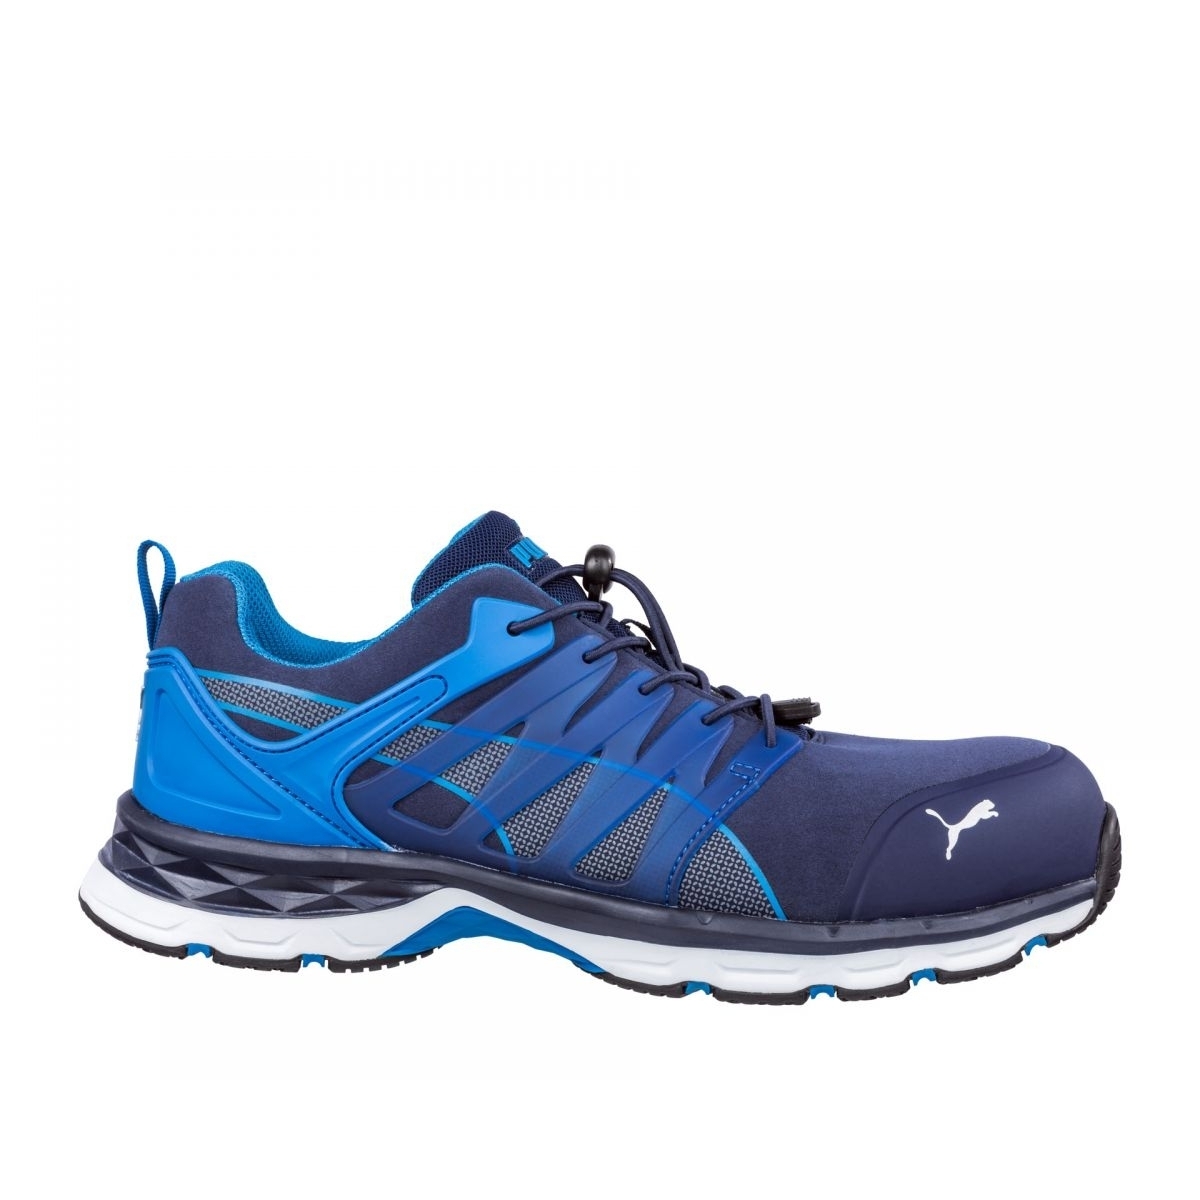 PUMA Safety Men's Velocity 2.0 Composite Toe ESD Work Shoe Blue - 643855 ONE SIZE BLUE - BLUE, 13